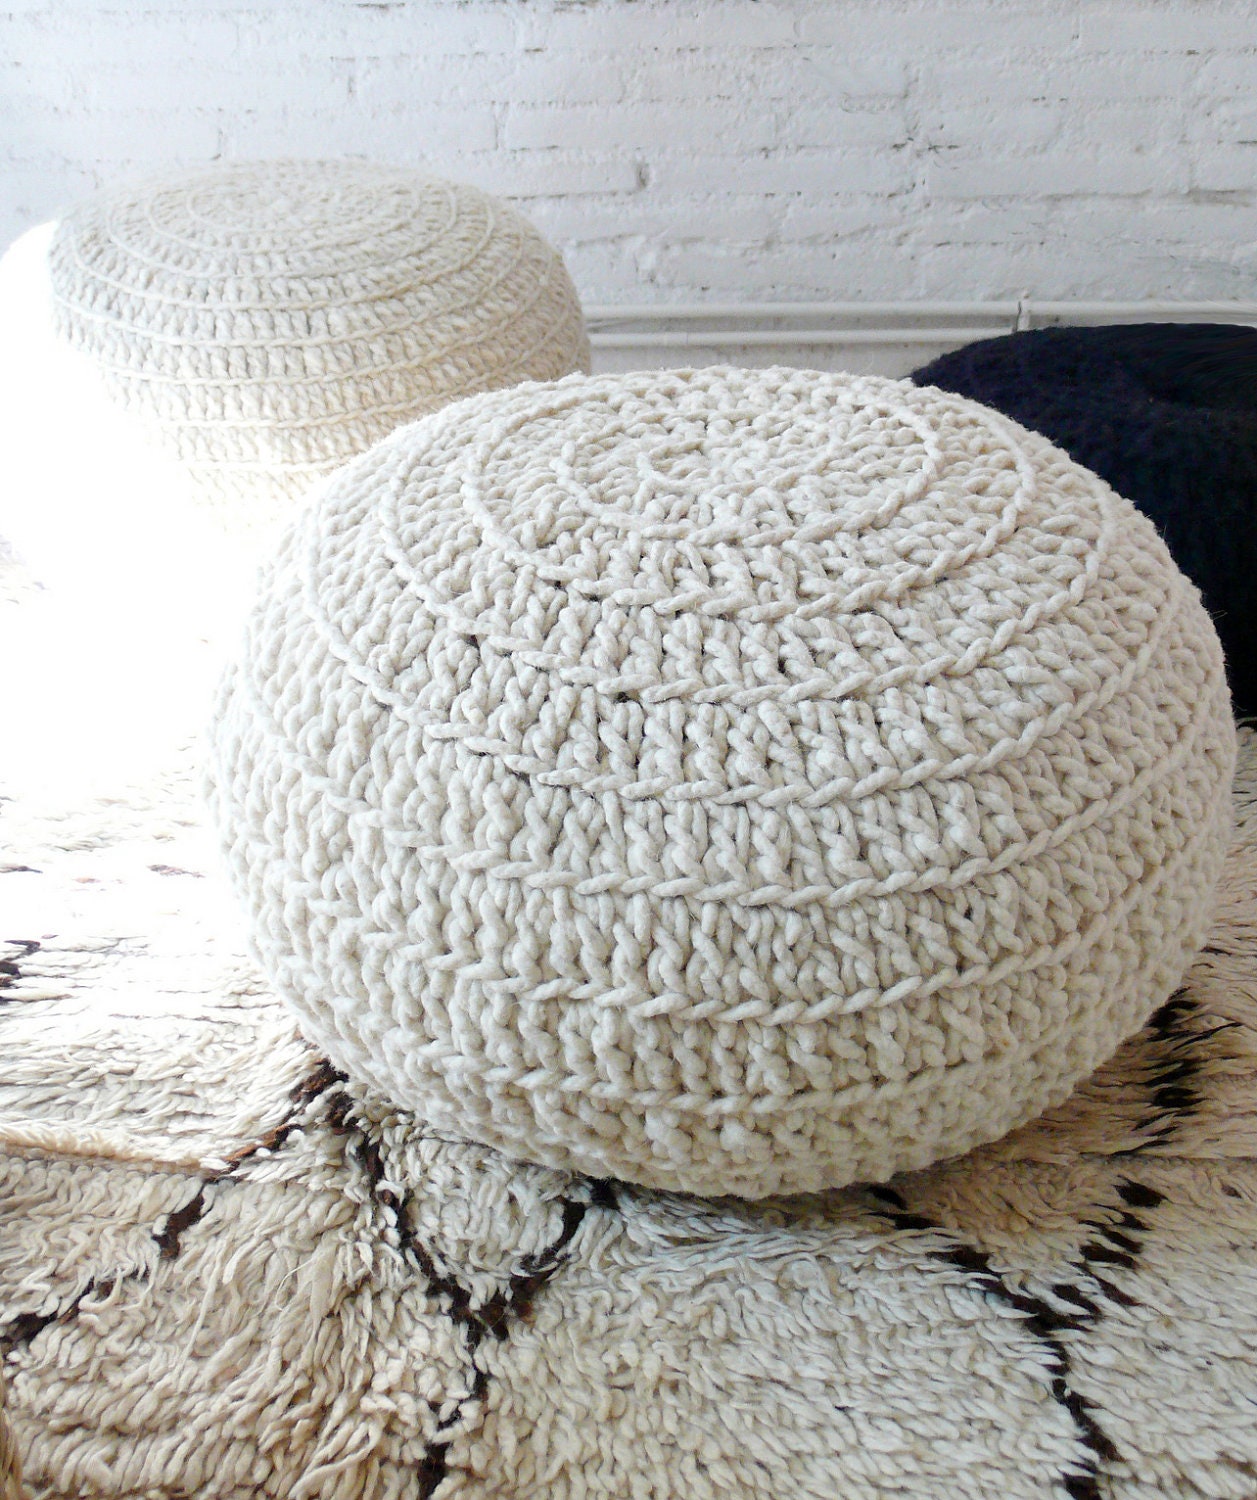 Crochet Pouf